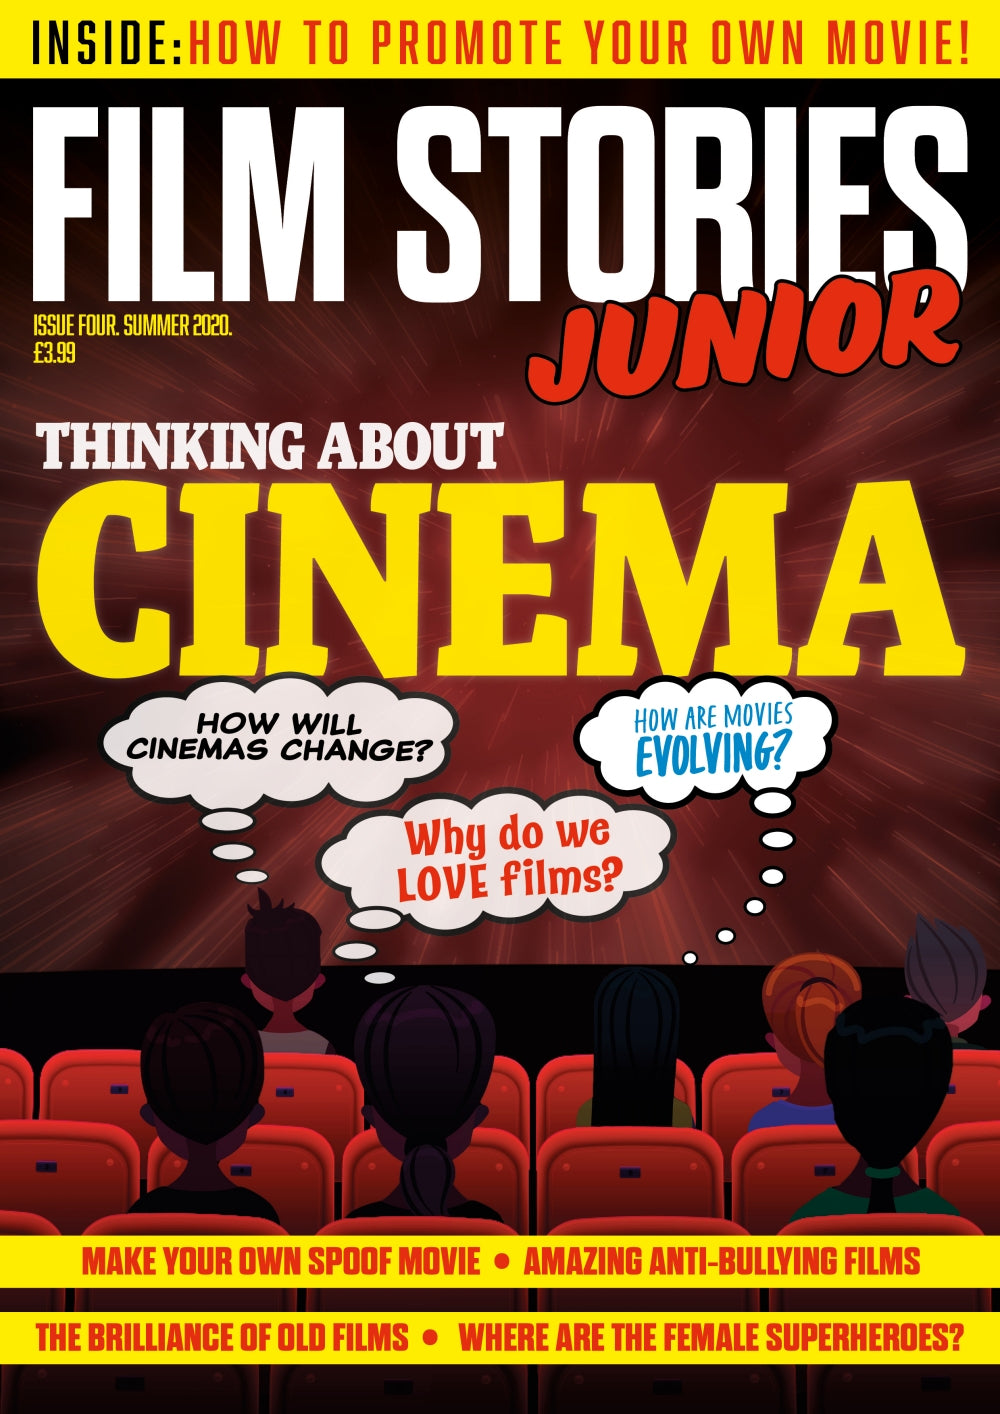 Film Stories Junior issue 4 (summer 2020)